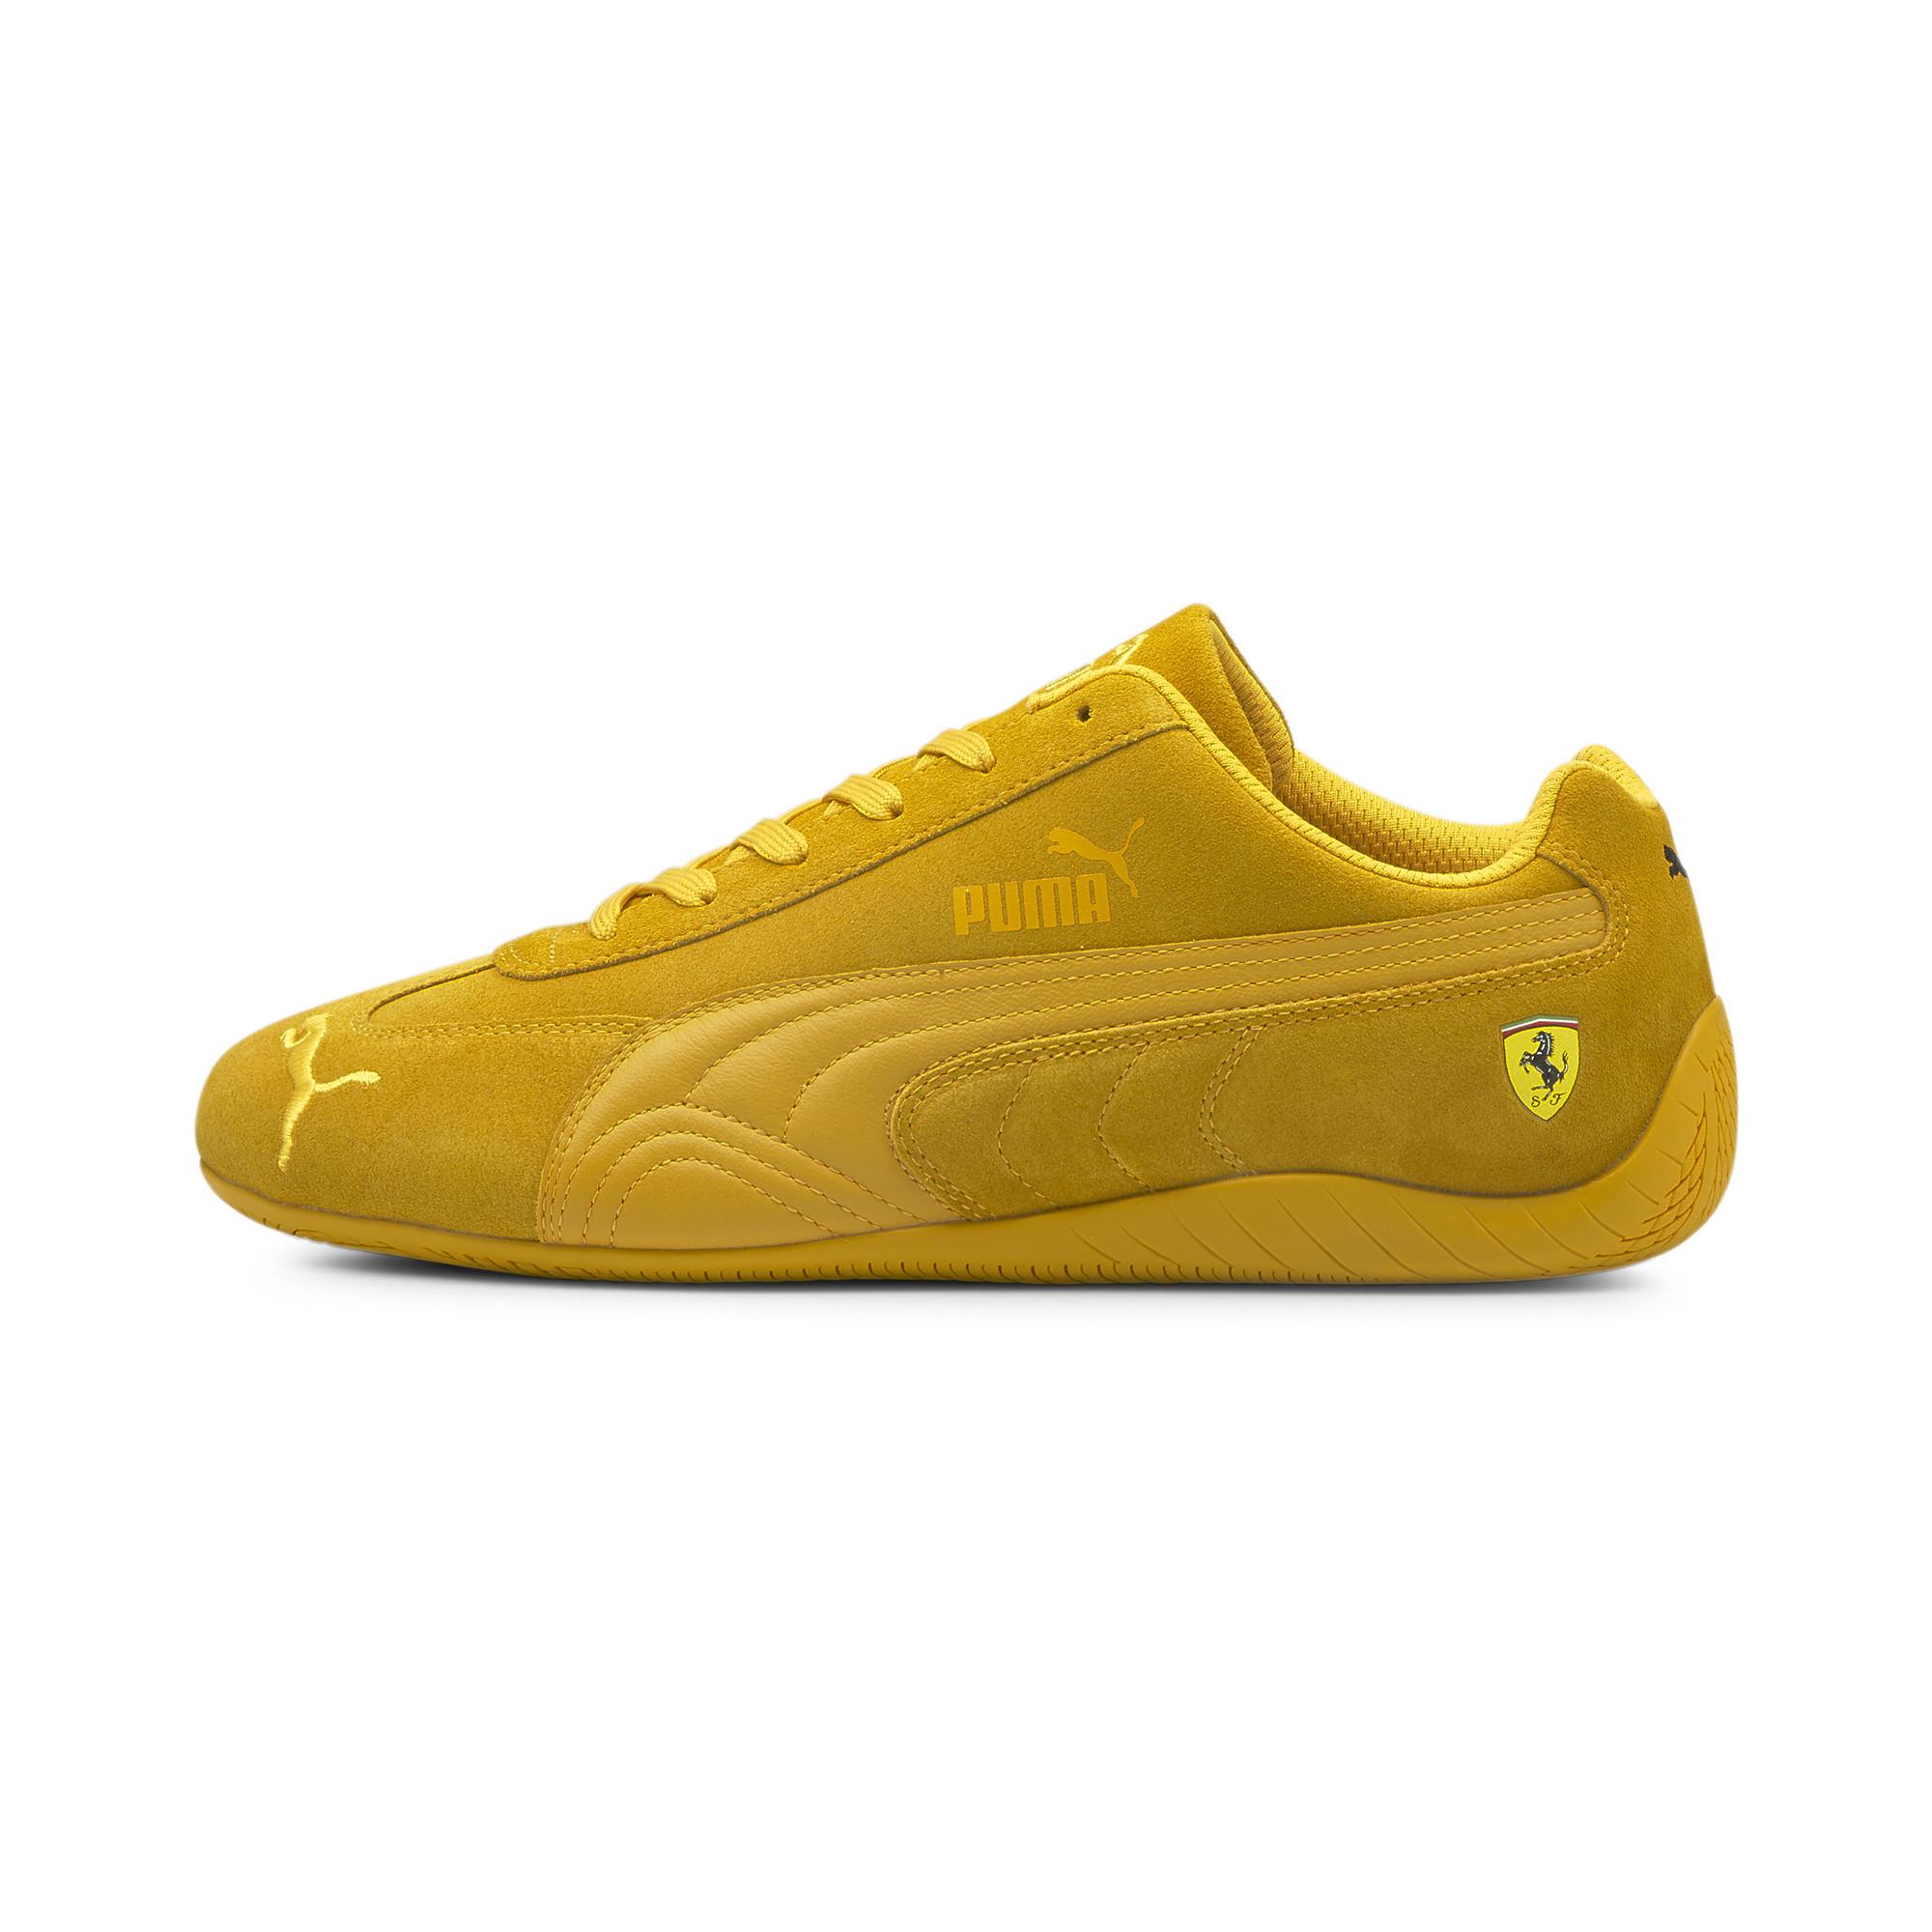 PUMA Suede Scuderia Ferrari Speedcat Driving Shoes in  Saffron-Saffron-Saffron (Yellow) | Lyst